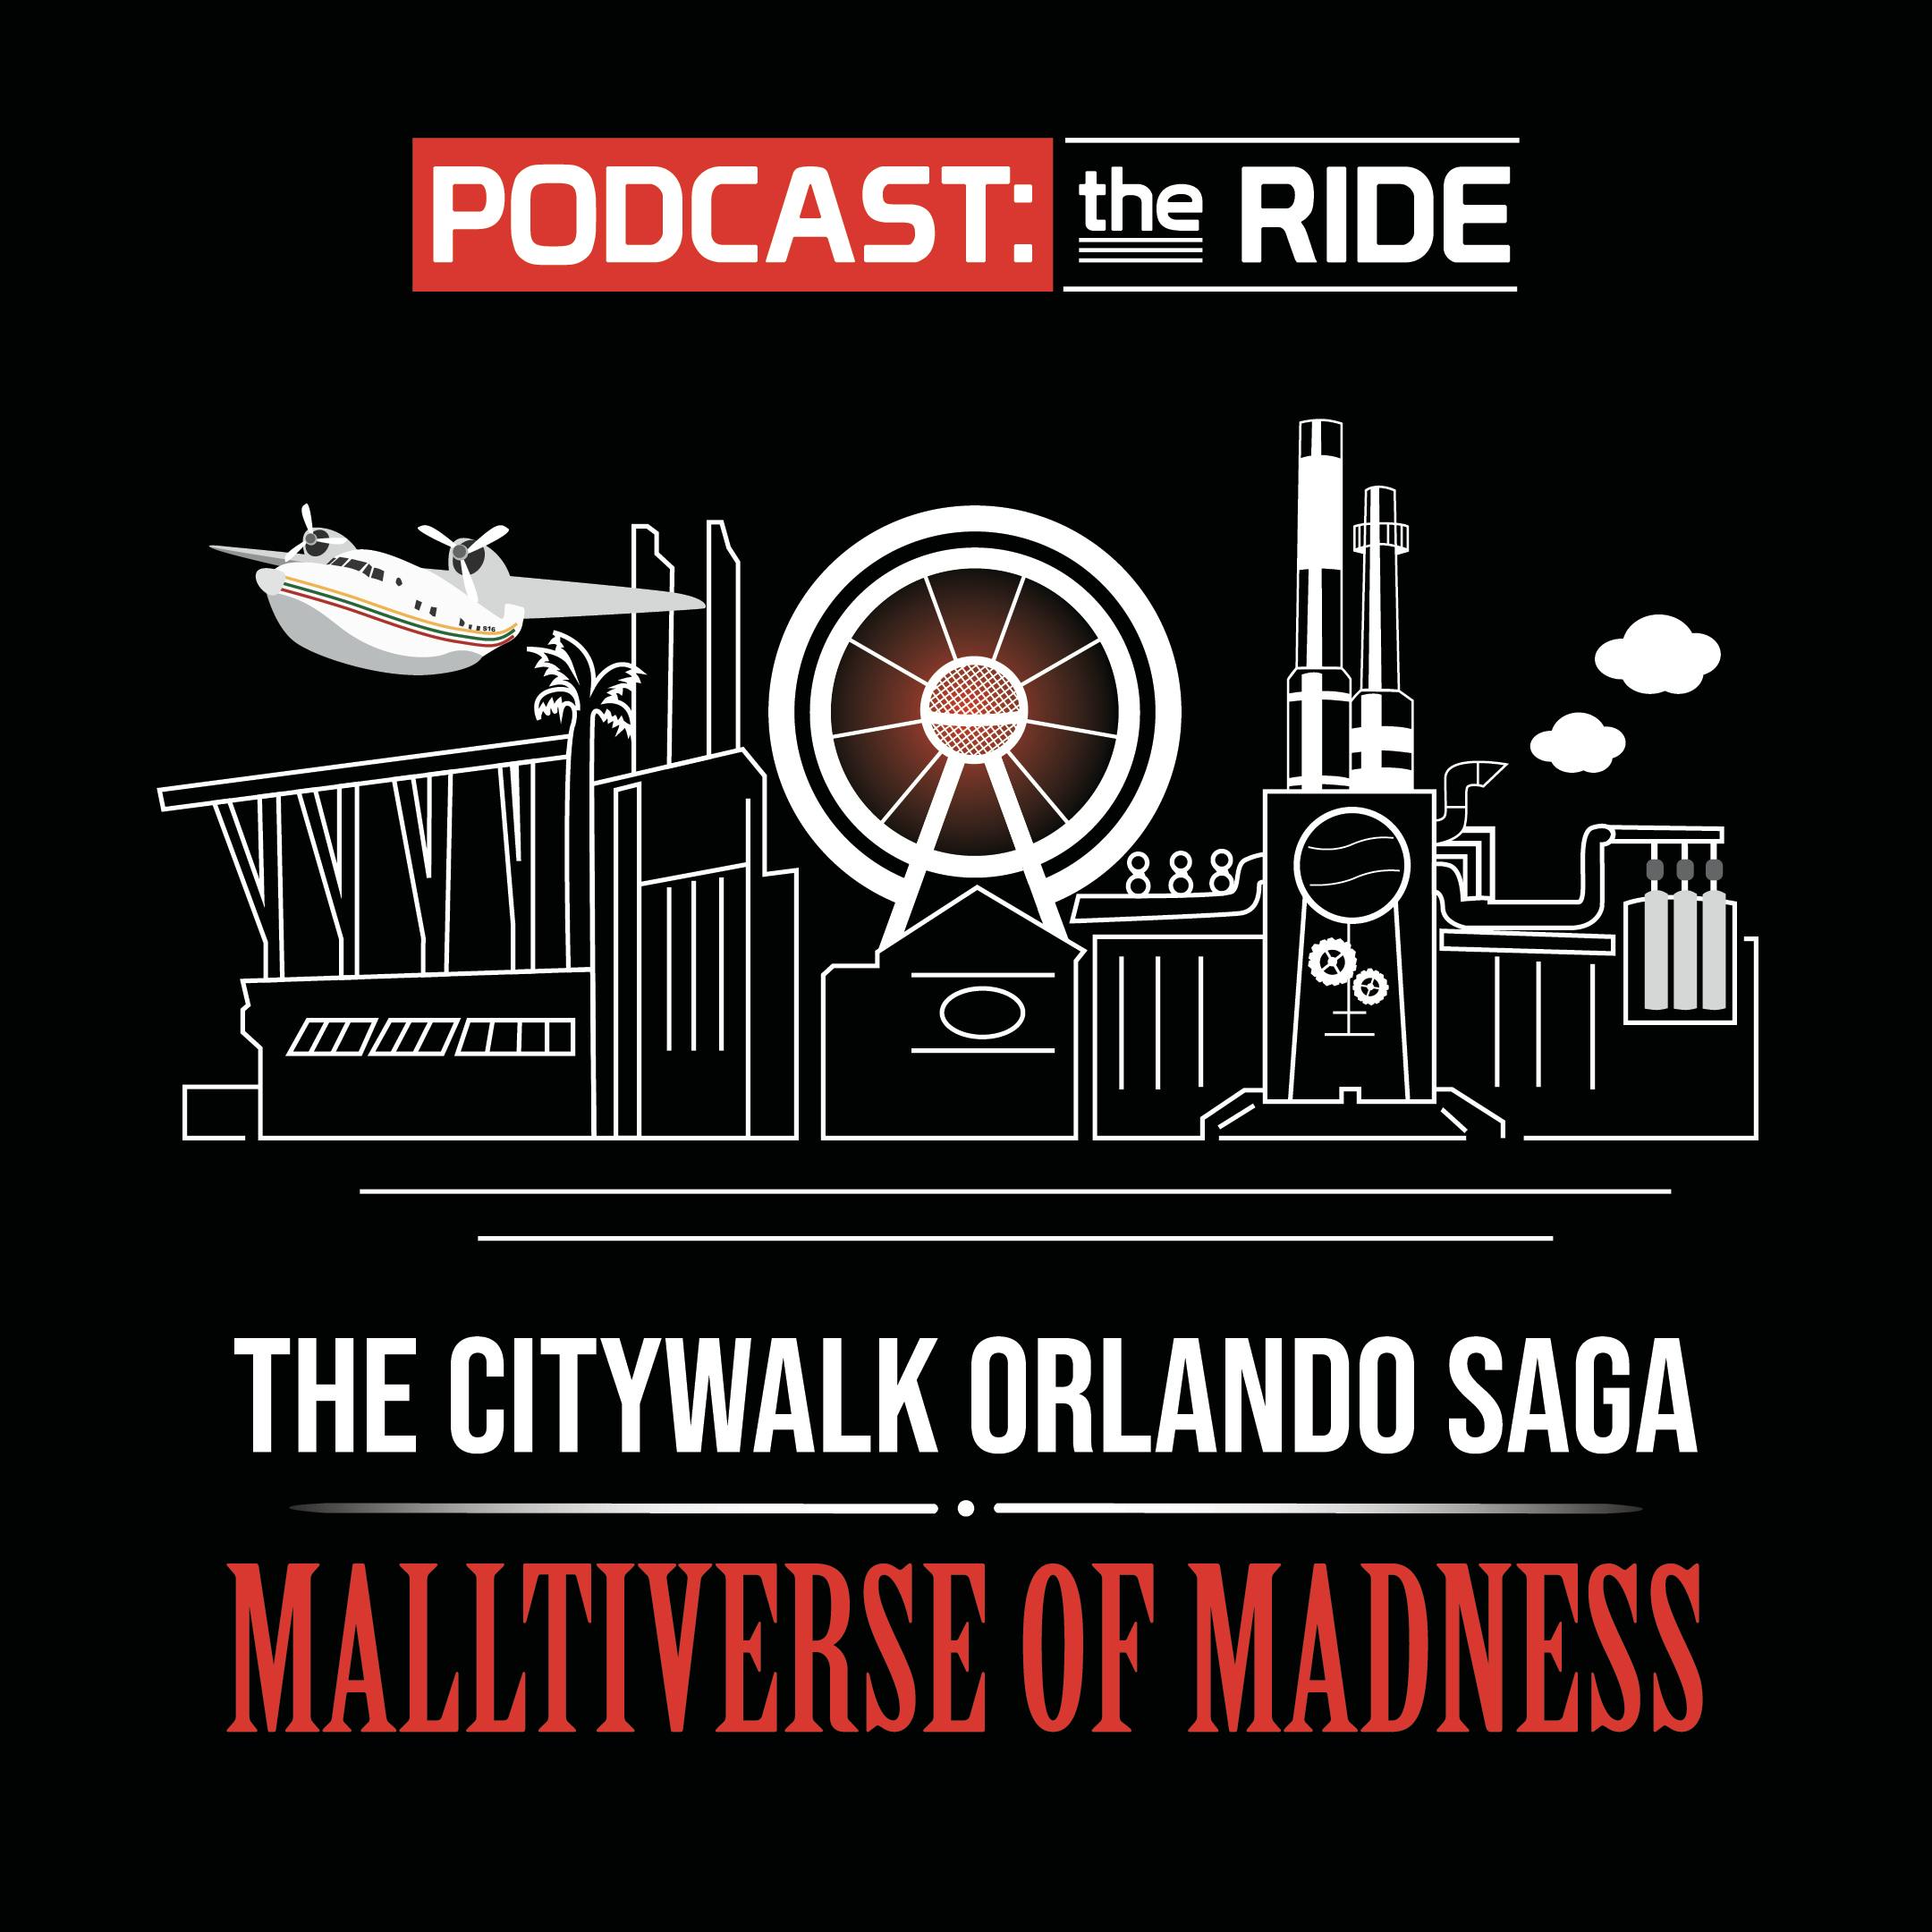 The CityWalk Orlando Saga: Malltiverse of Madness 6 - 3 with Van Robichaux